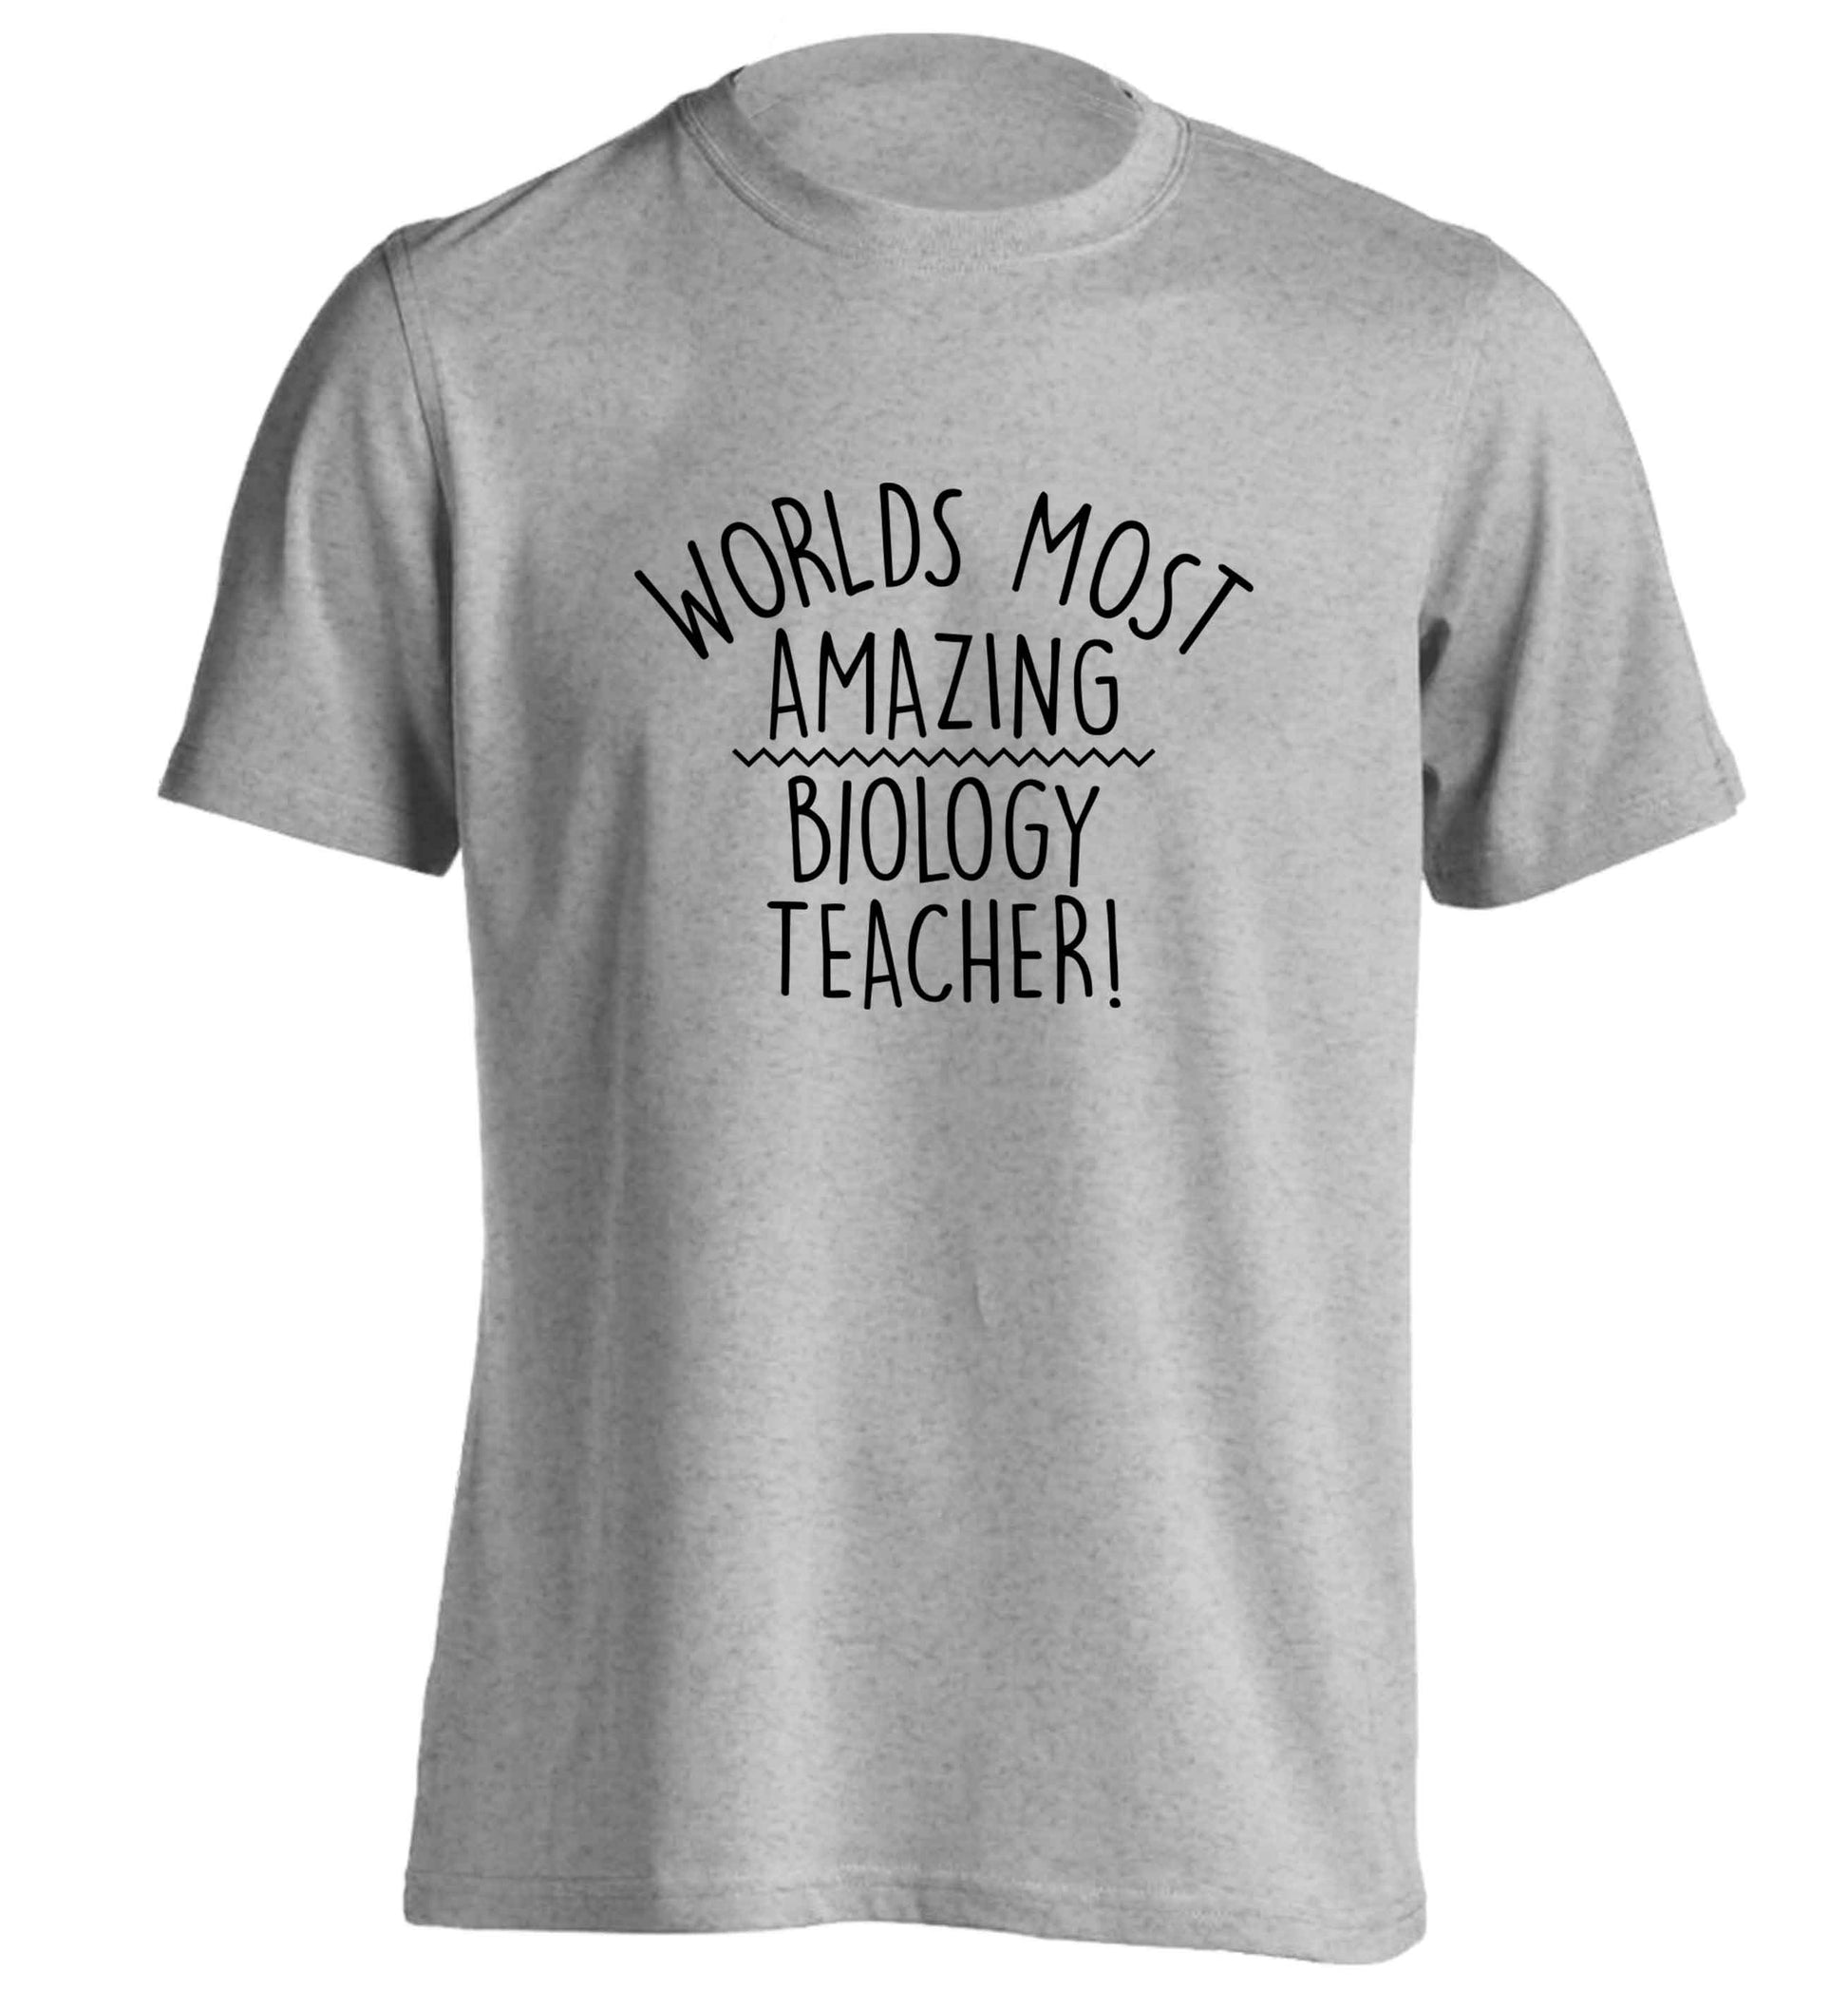 Worlds most amazing biology teacher adults unisex grey Tshirt 2XL